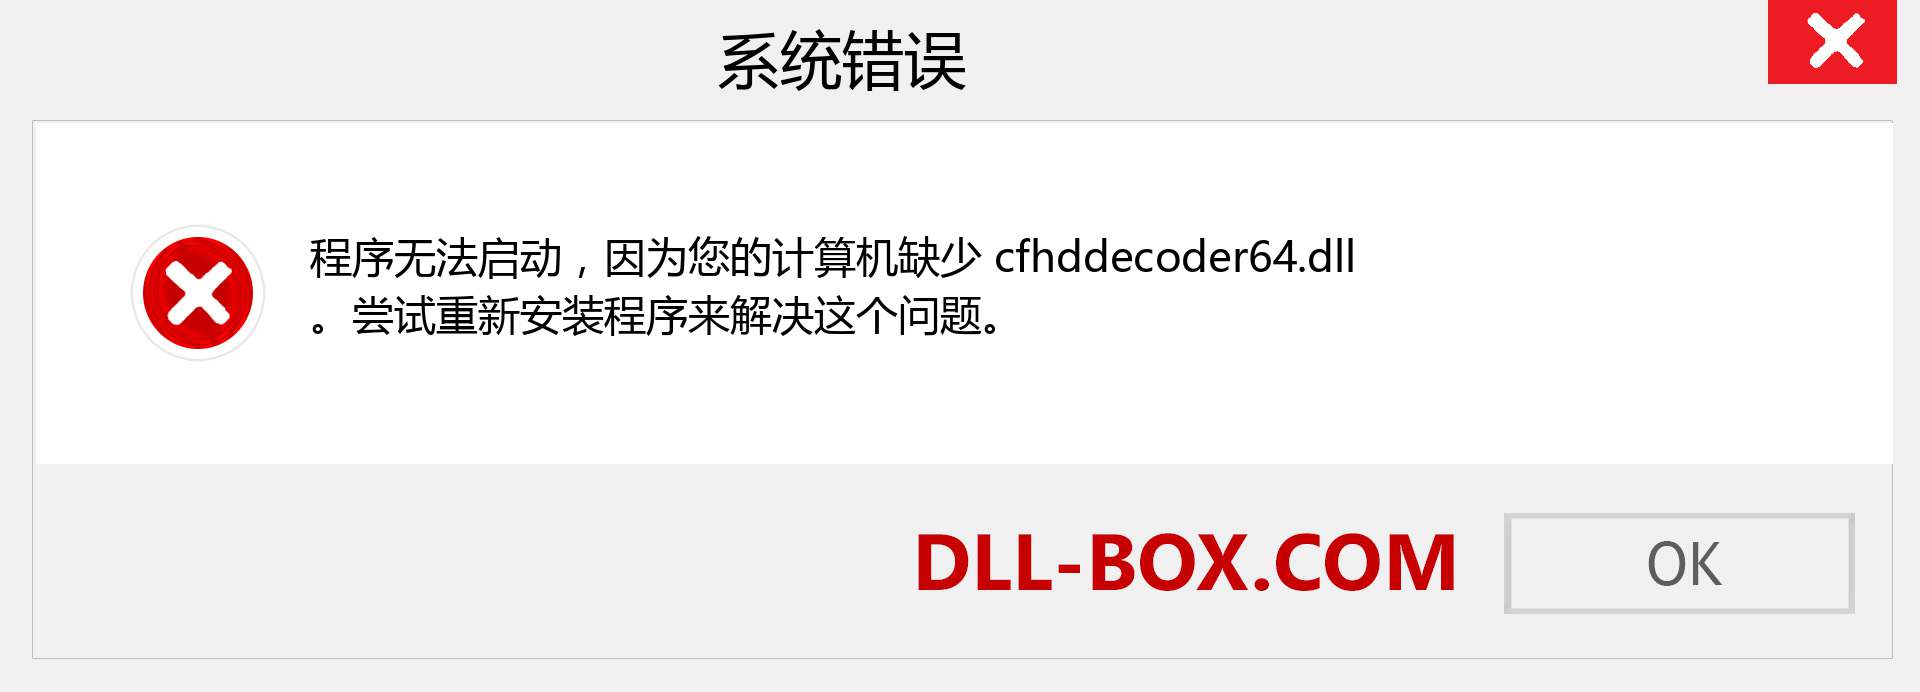 cfhddecoder64.dll 文件丢失？。 适用于 Windows 7、8、10 的下载 - 修复 Windows、照片、图像上的 cfhddecoder64 dll 丢失错误